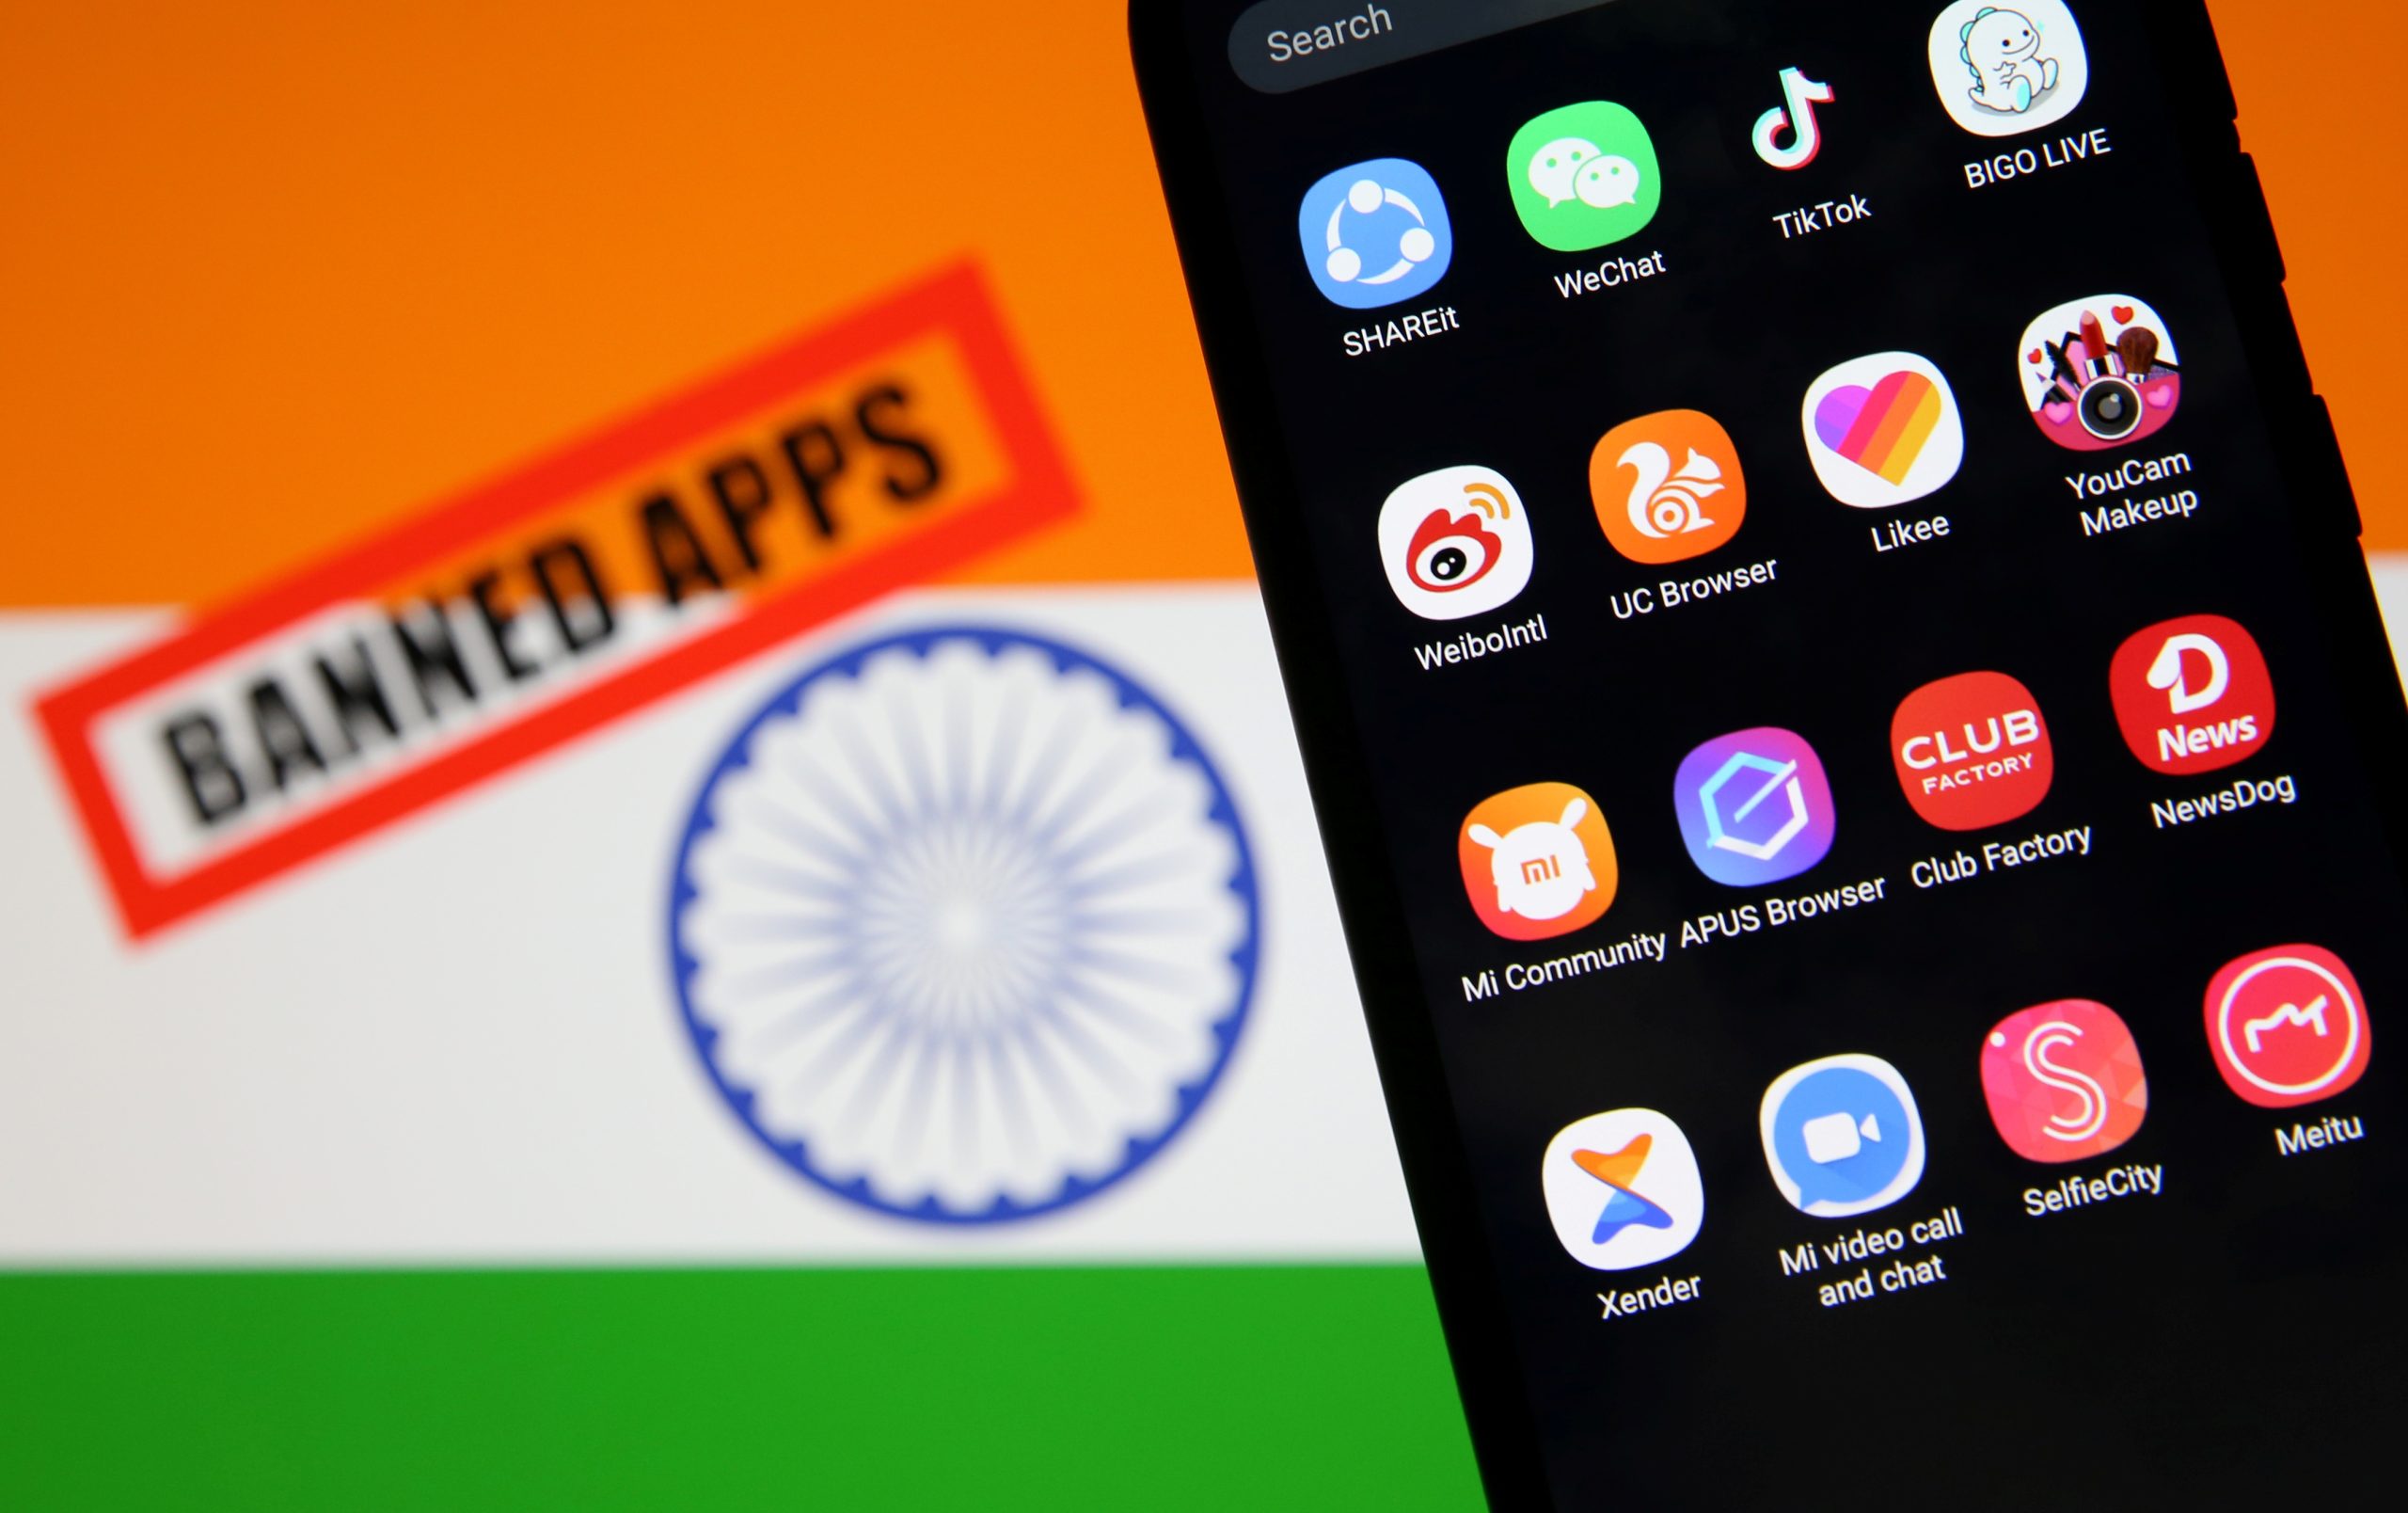 Center blocks 14 mobile messenger apps being used by terrorist